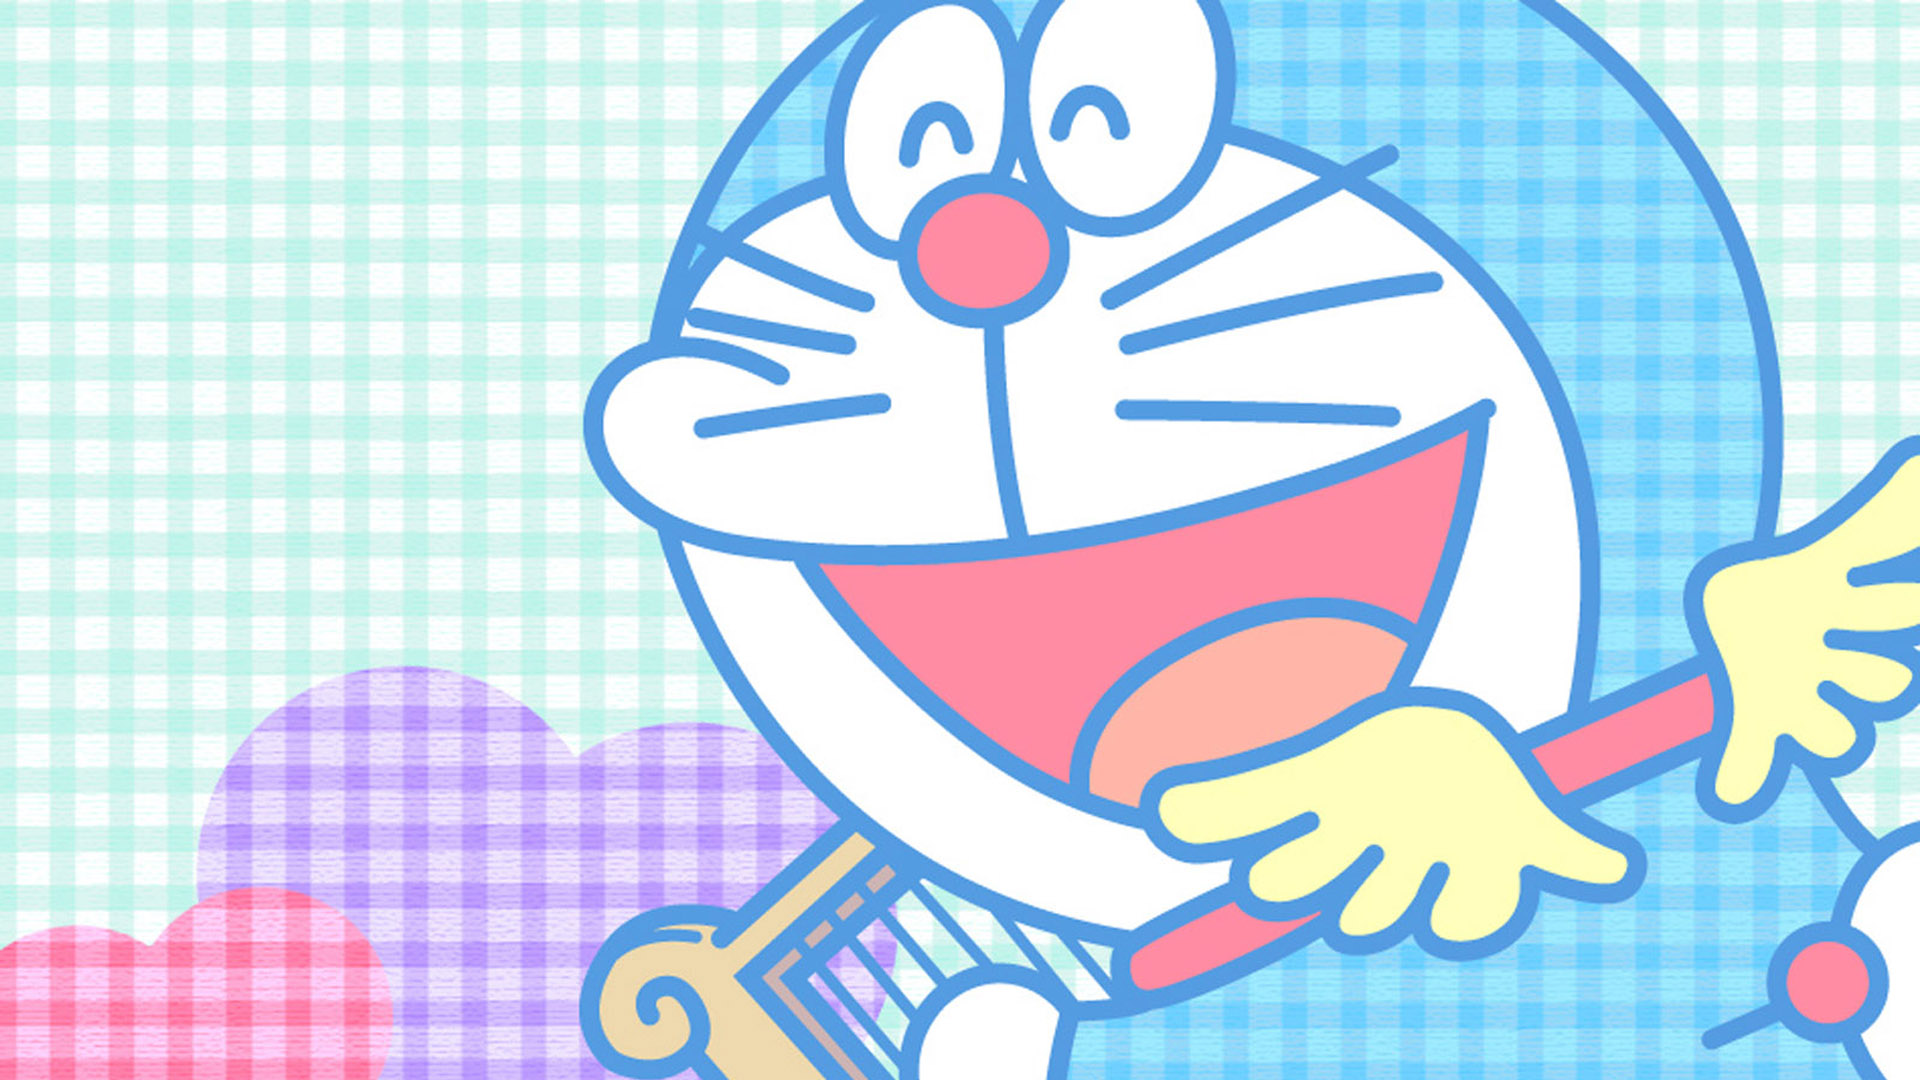 Doraemon 1920x1080 - Wallpaper, High Definition, High Quality, Widescreen